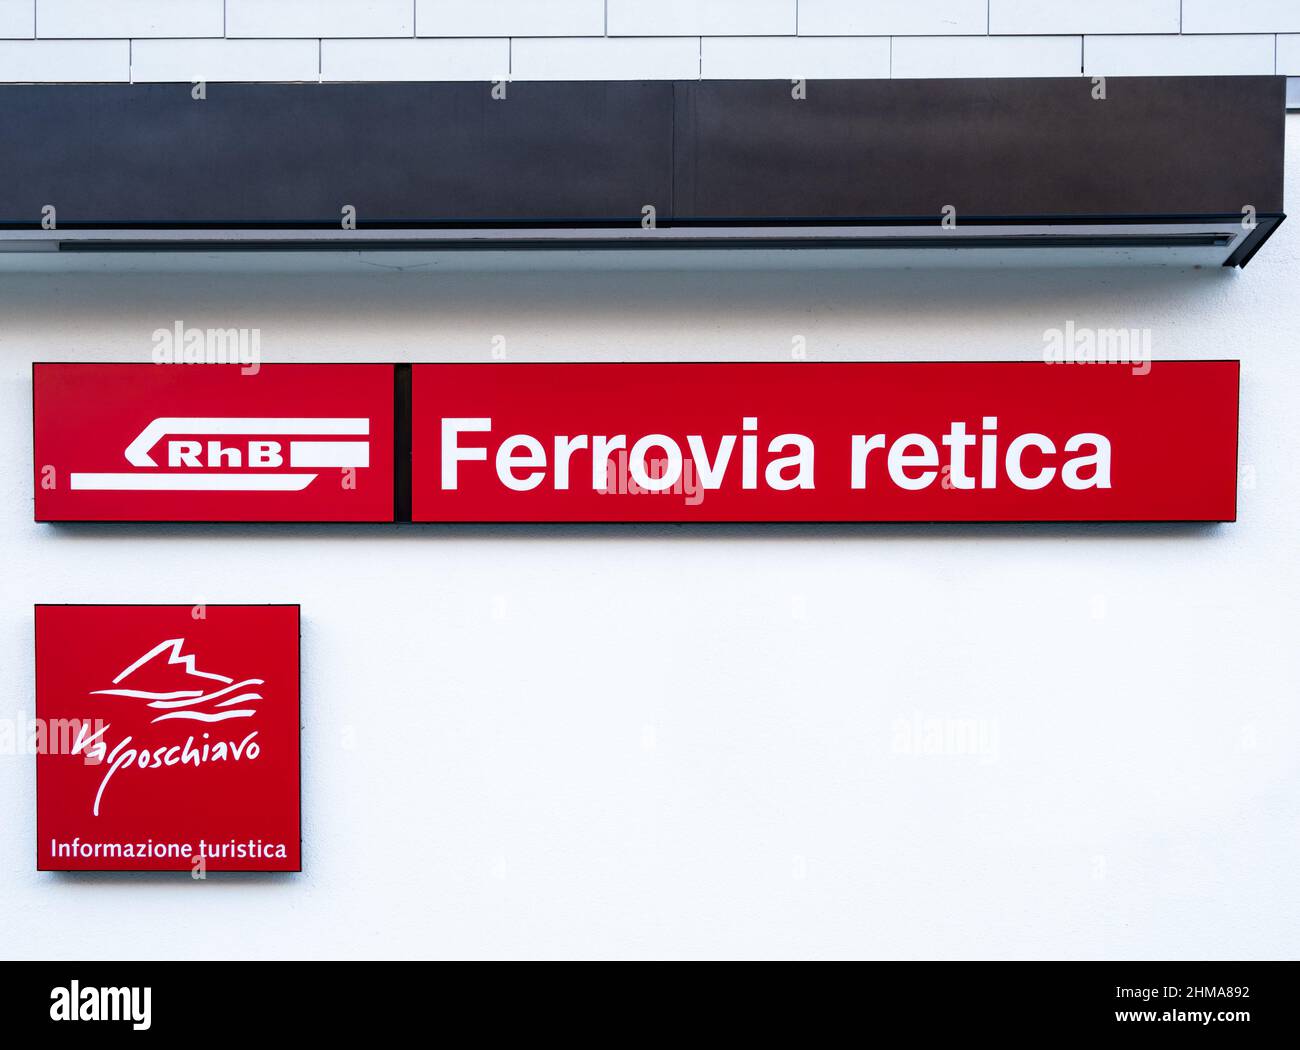 Poschiavo, Switzerland - January 19, 2022: The Rhaetian Railway - Ferrovia retica - is a railway company and infrastructure operator in Switzerland. Stock Photo